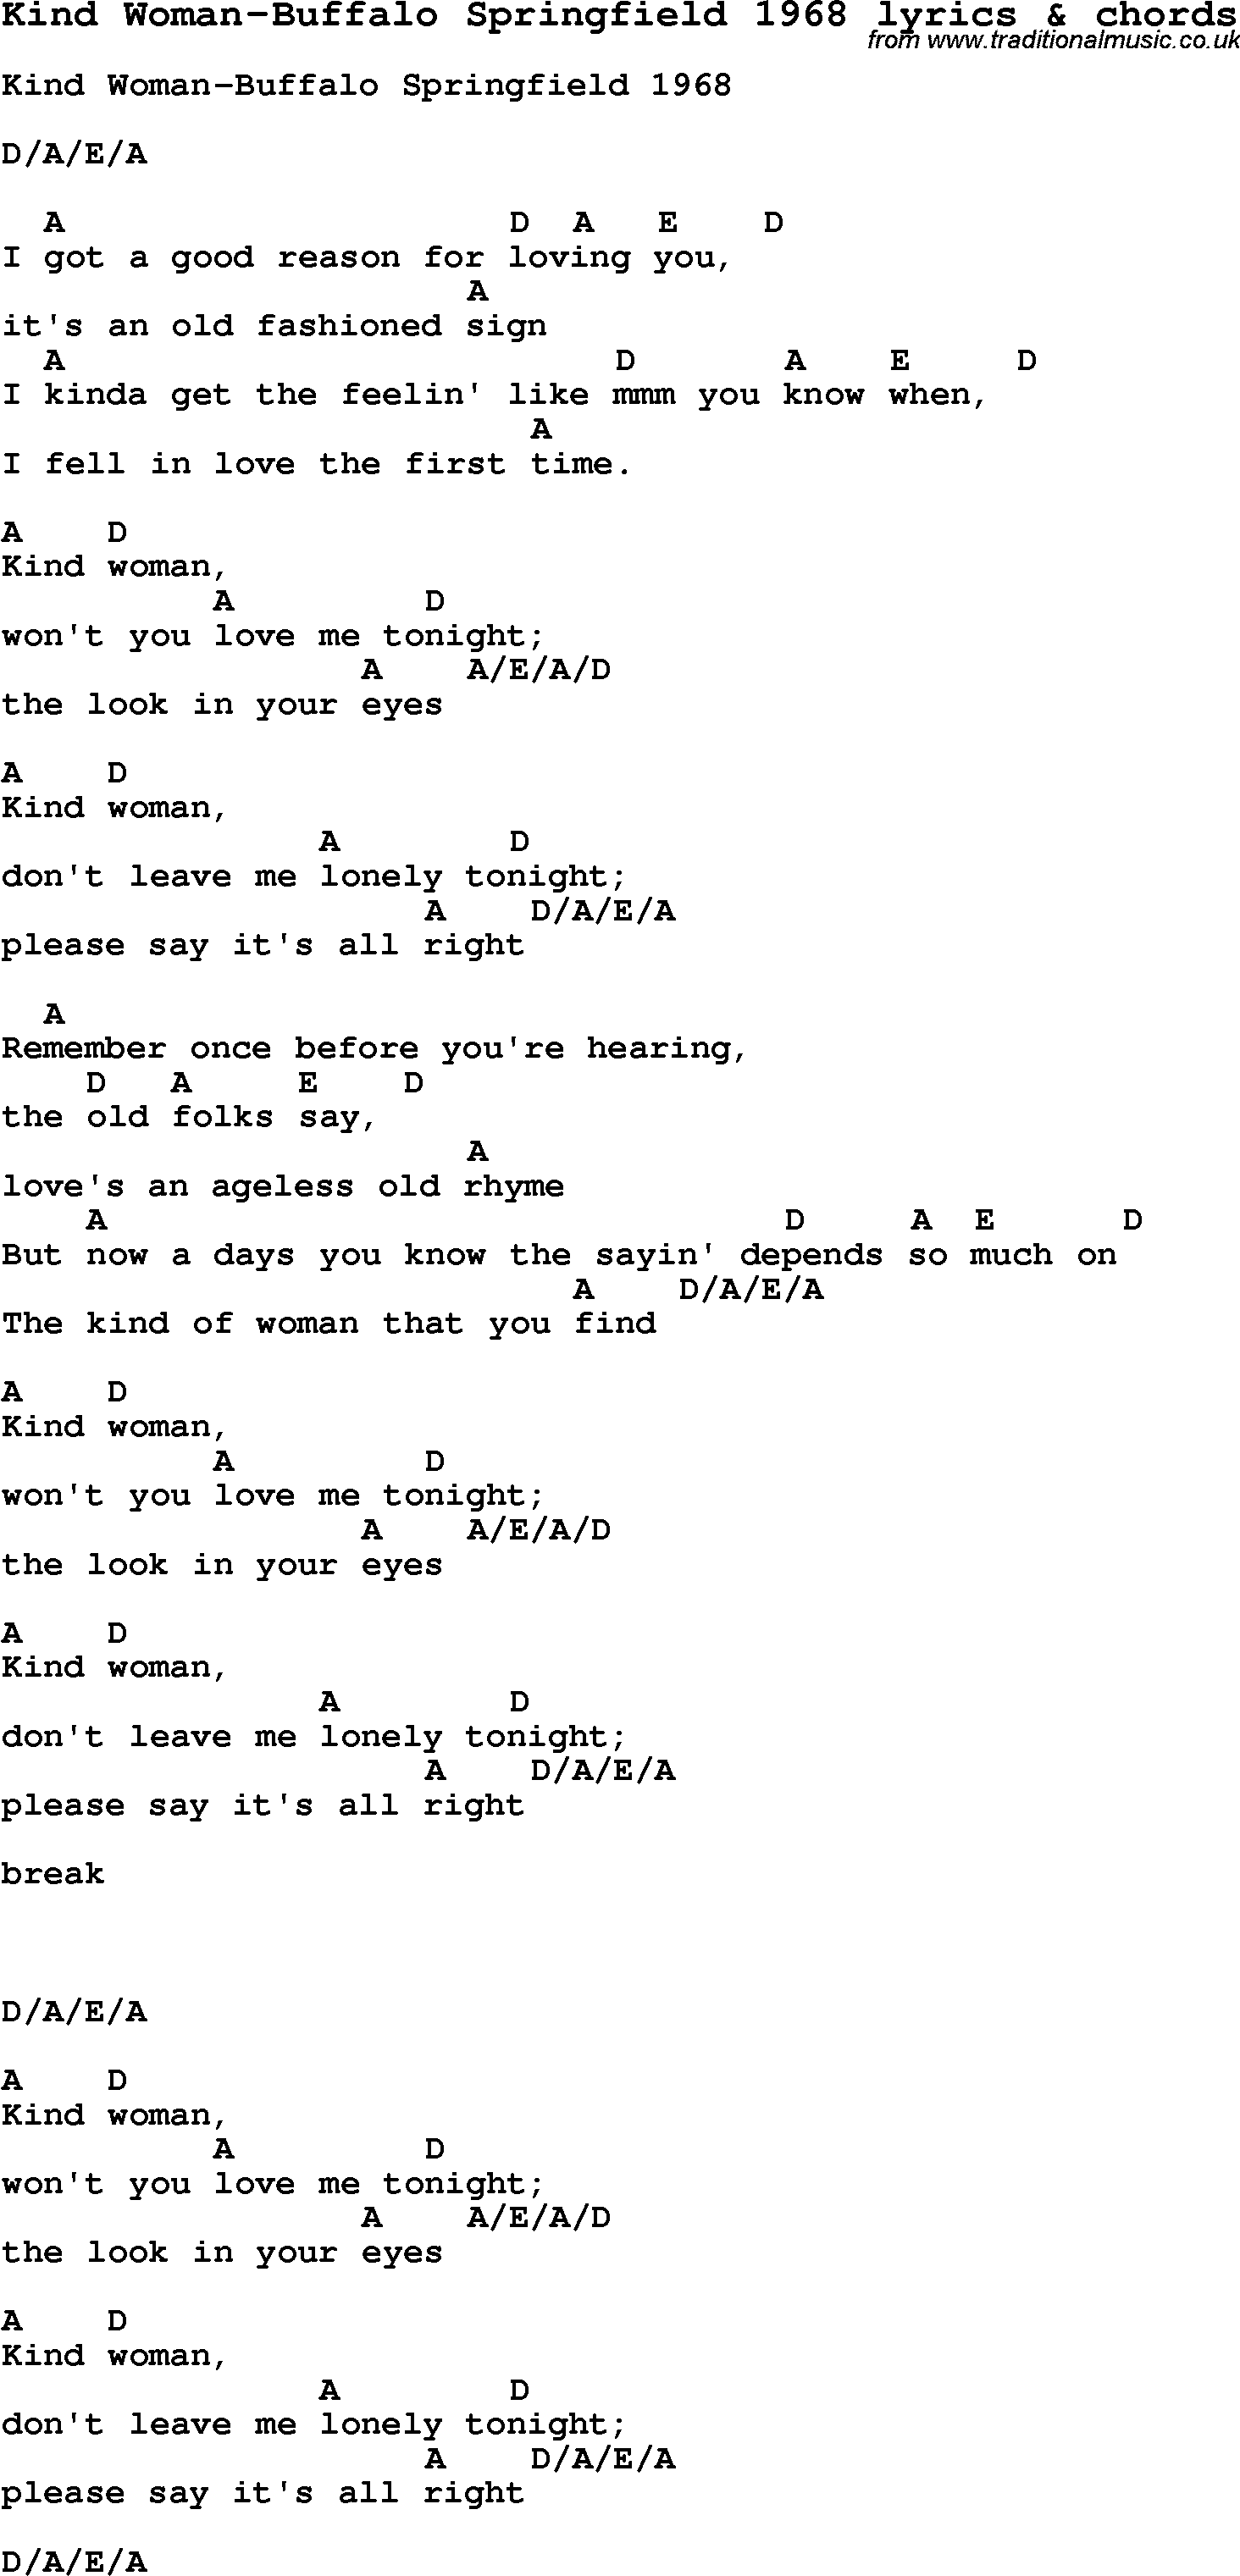 Love Song Lyrics for: Kind Woman-Buffalo Springfield 1968 with chords for Ukulele, Guitar Banjo etc.